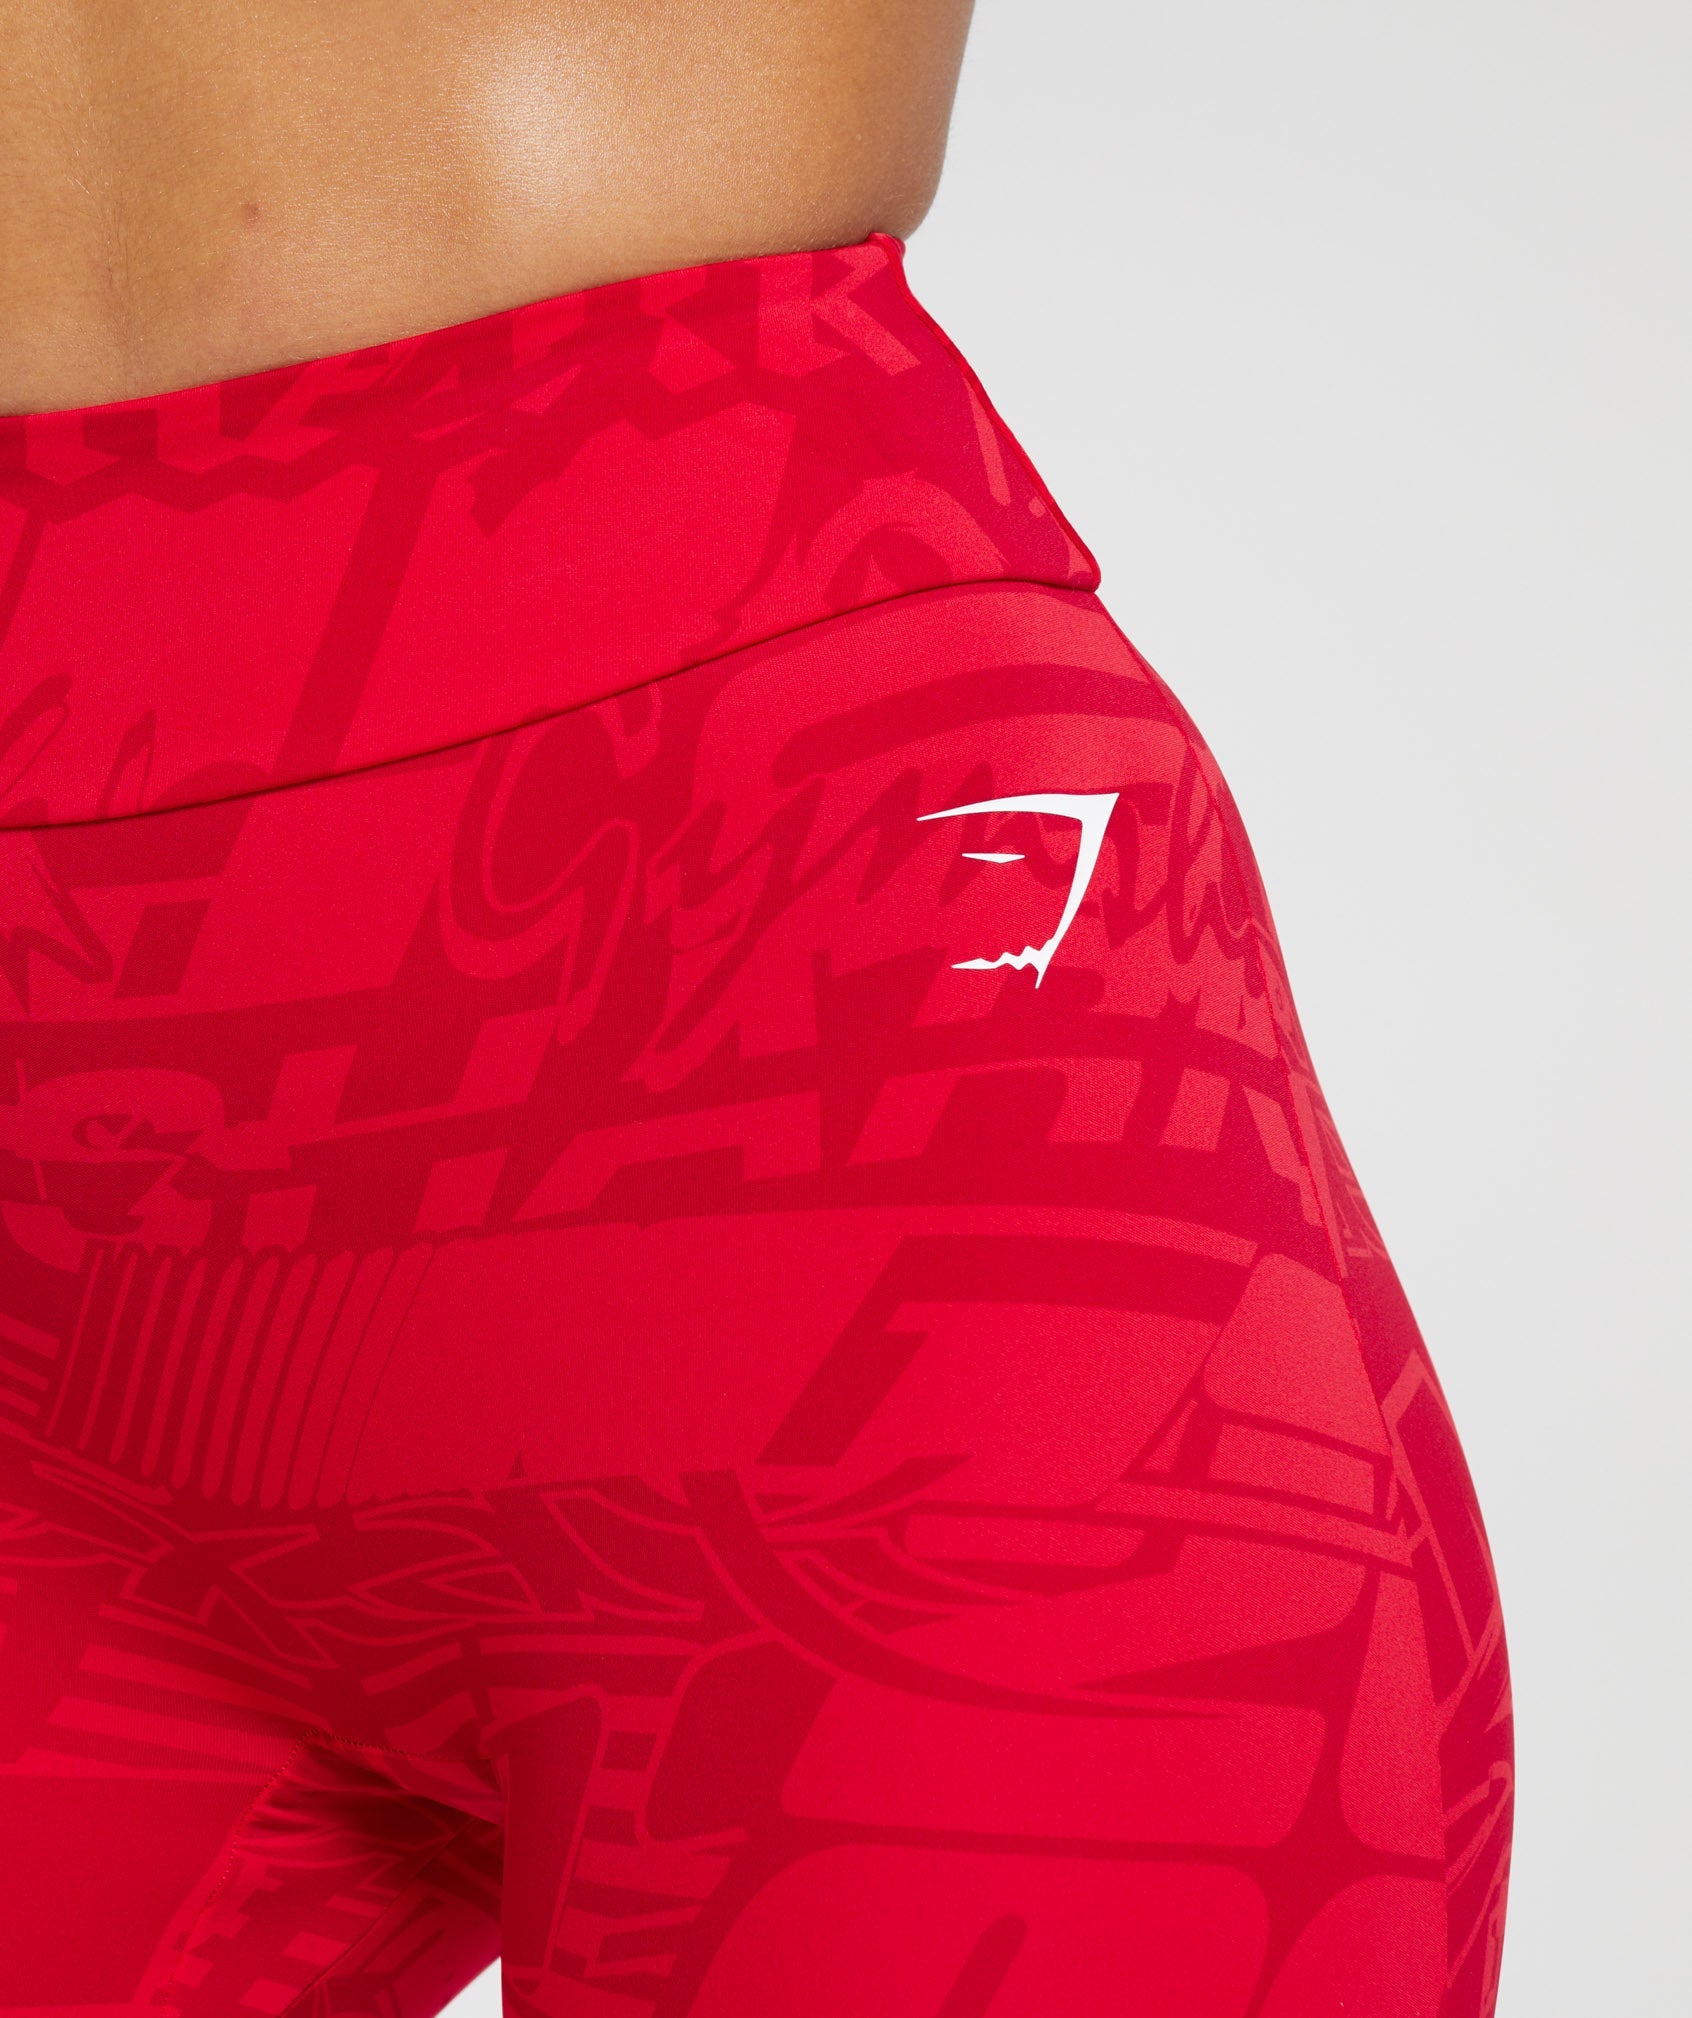 Gymshark GS Power High Rise Shorts - Carmine Red